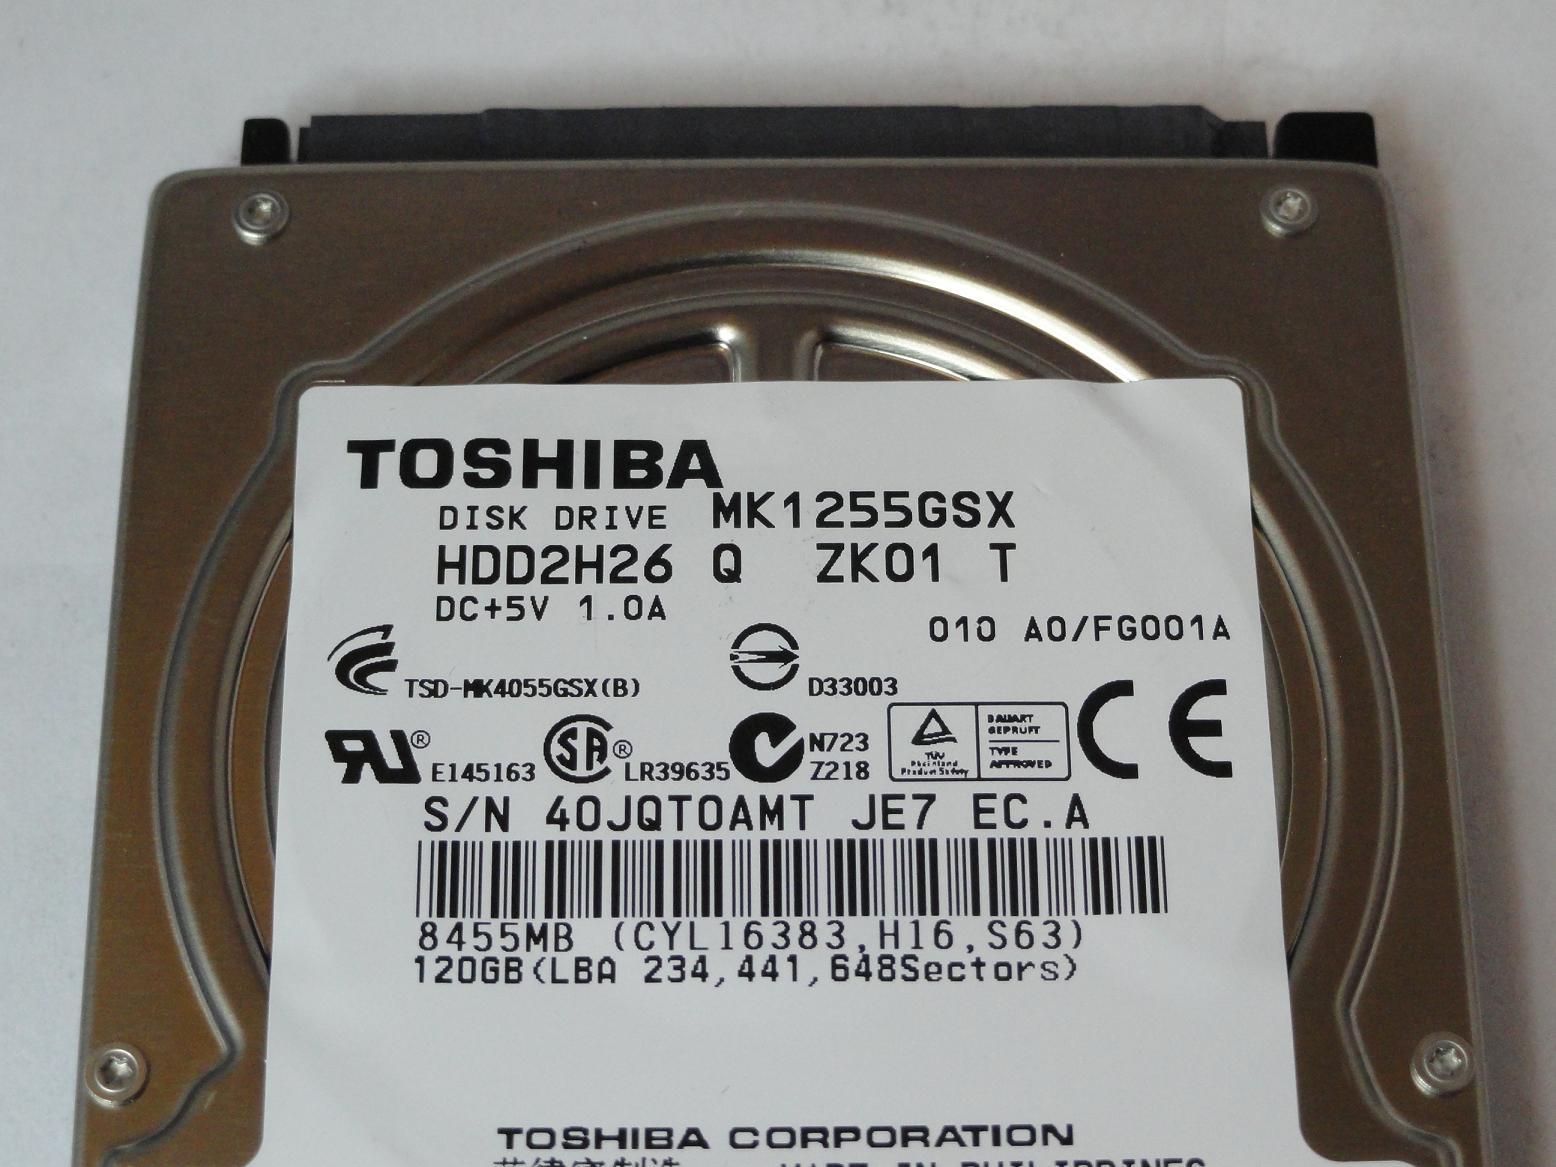 PR11400_HDD2H26_Toshiba 120GB SATA 5400rpm 2.5in Laptop HDD - Image3